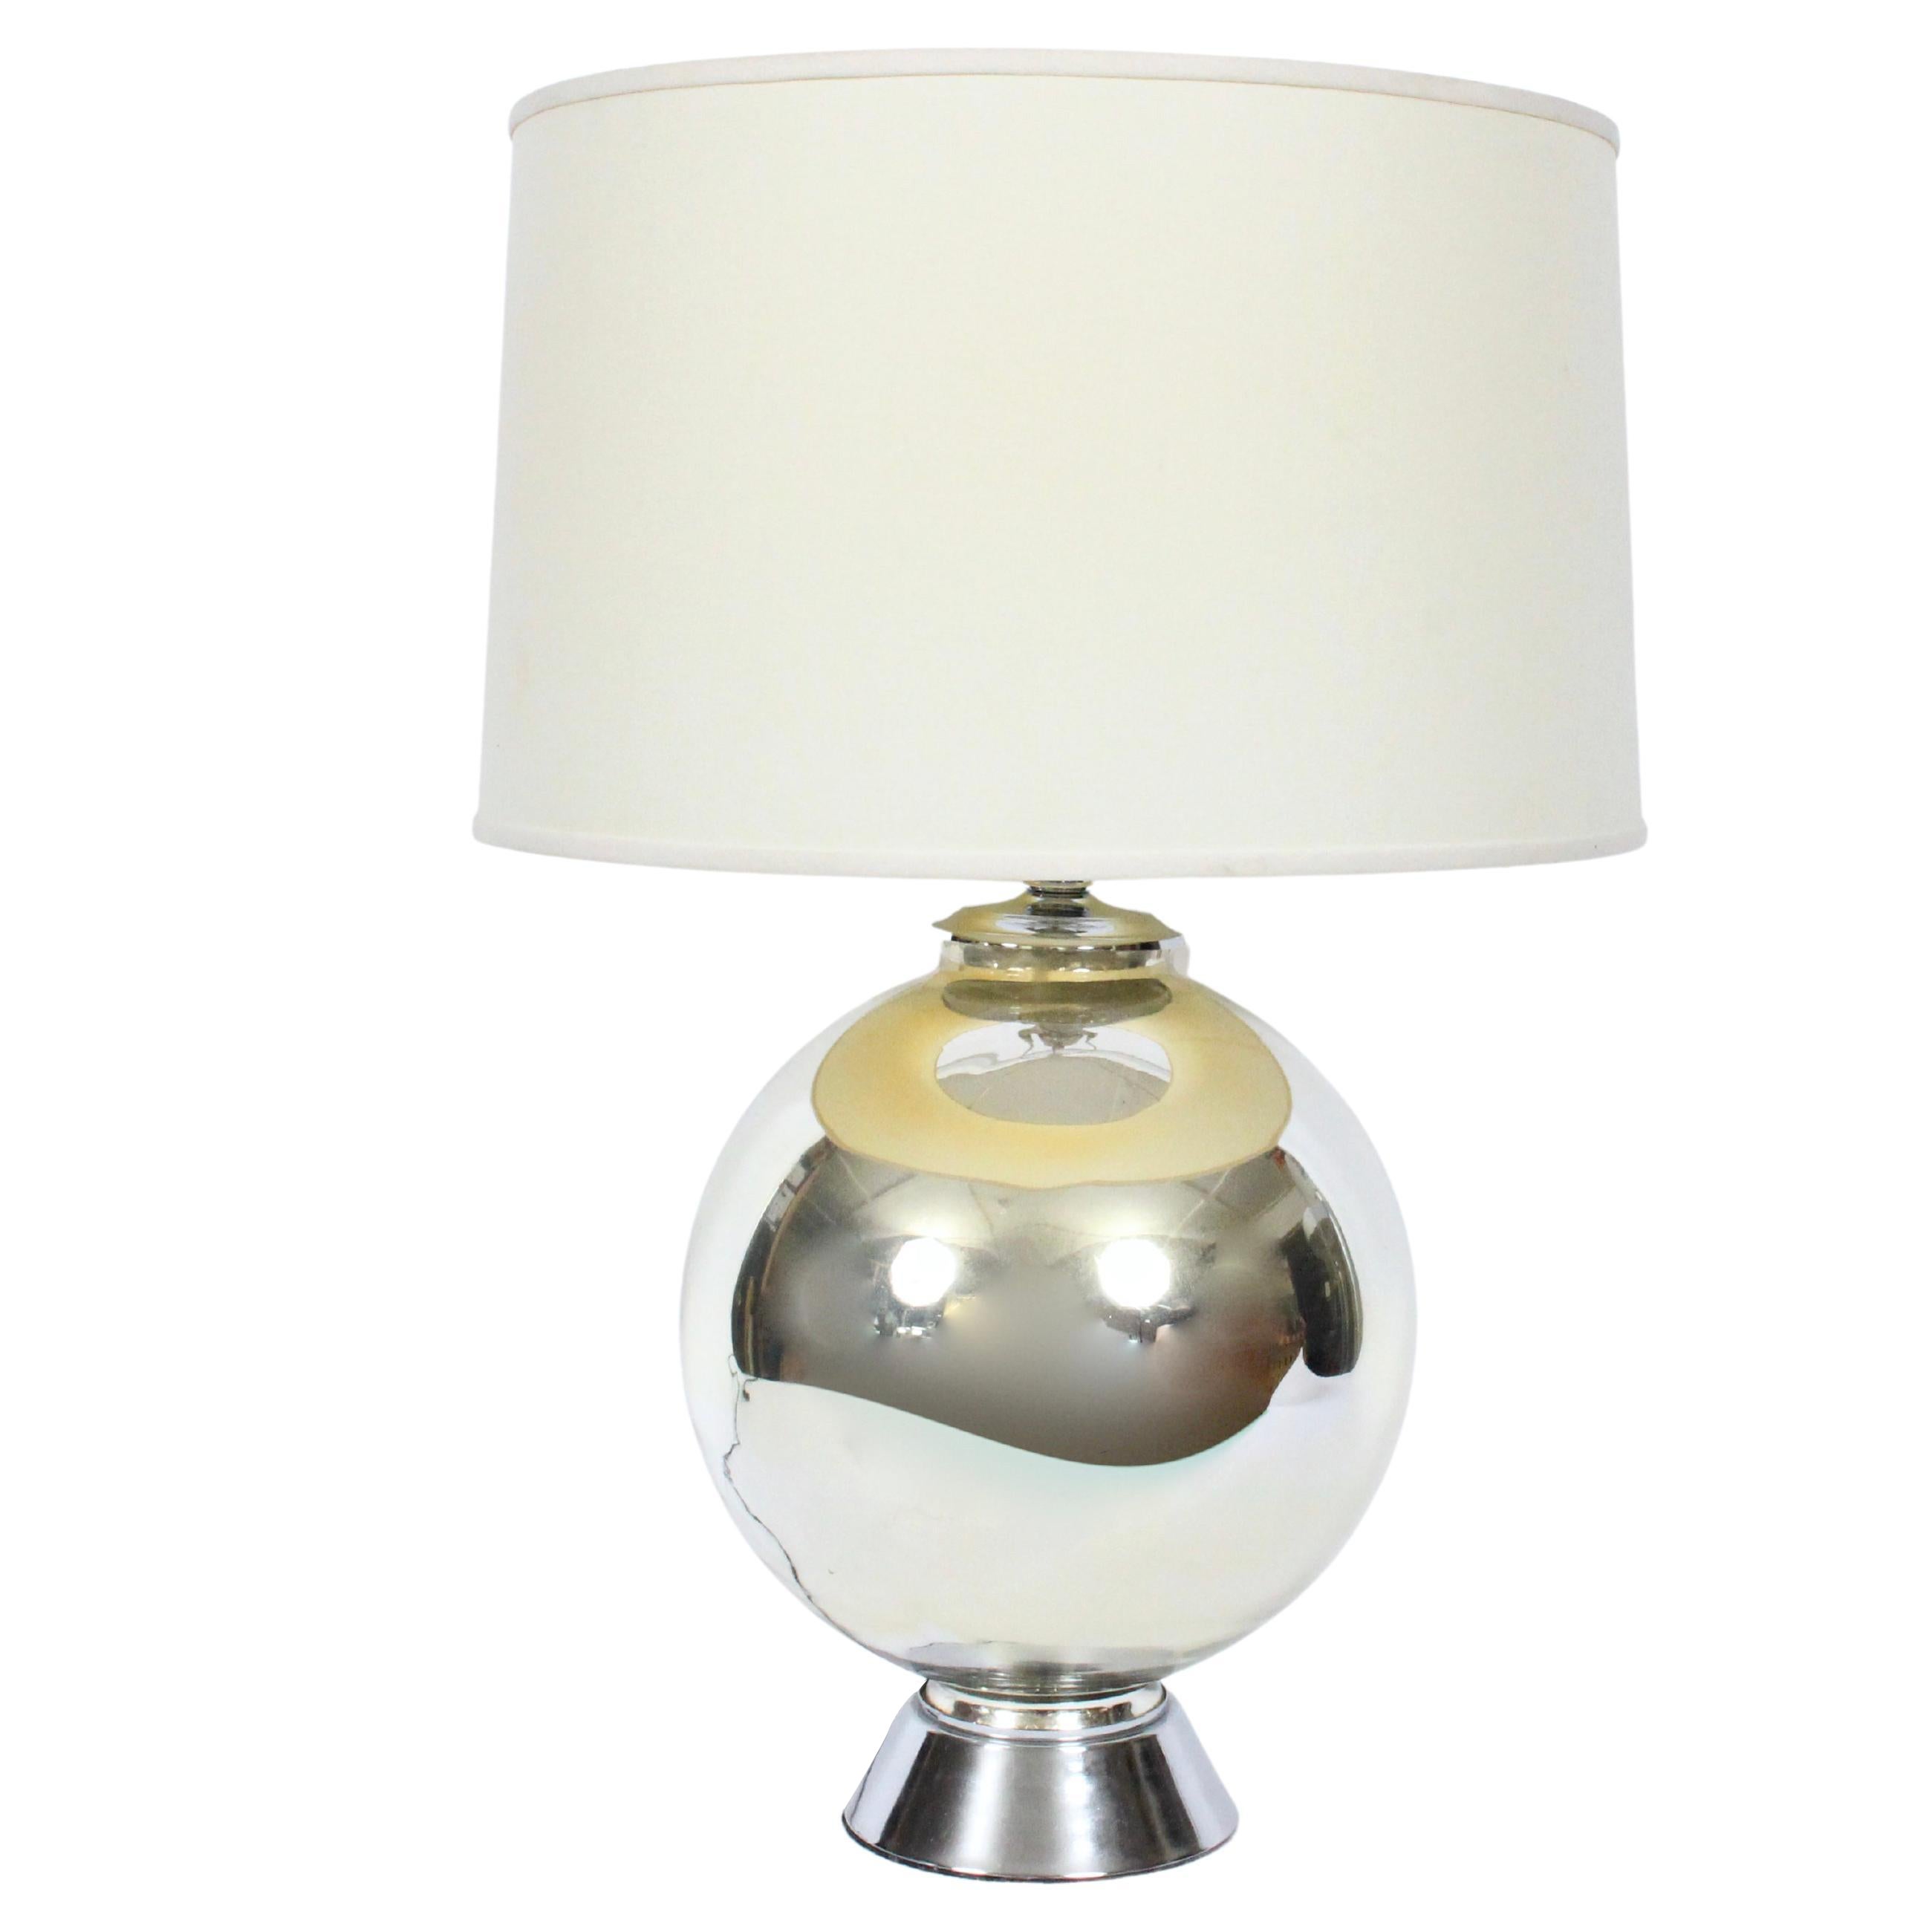 Chapman Co. Mercury Glass Ball Table Lamp, 1960's For Sale